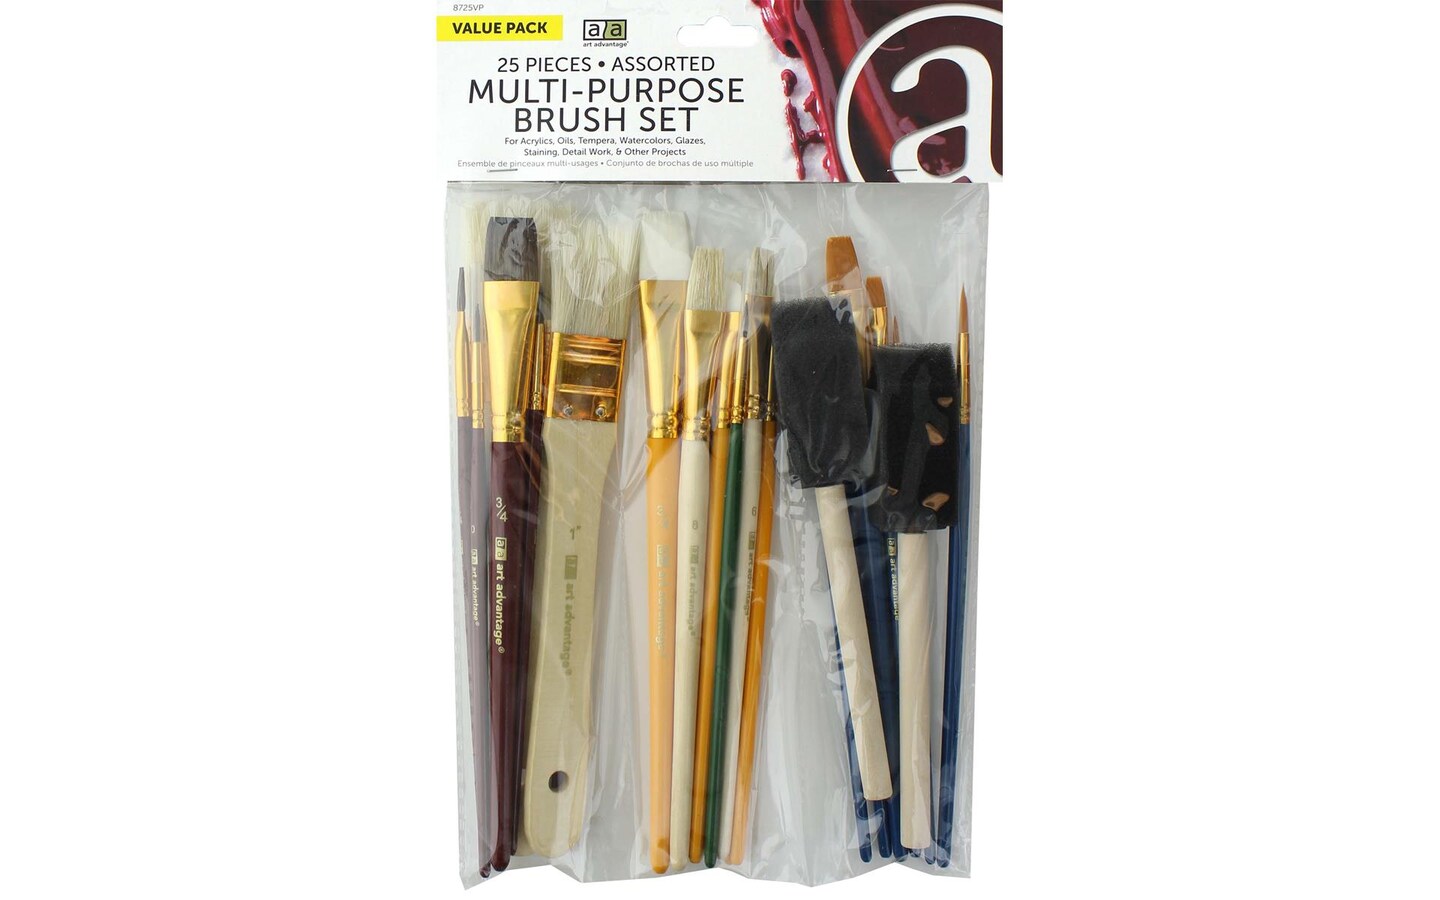 Art Advantage Brush/Sumi Ink Set 4pc 